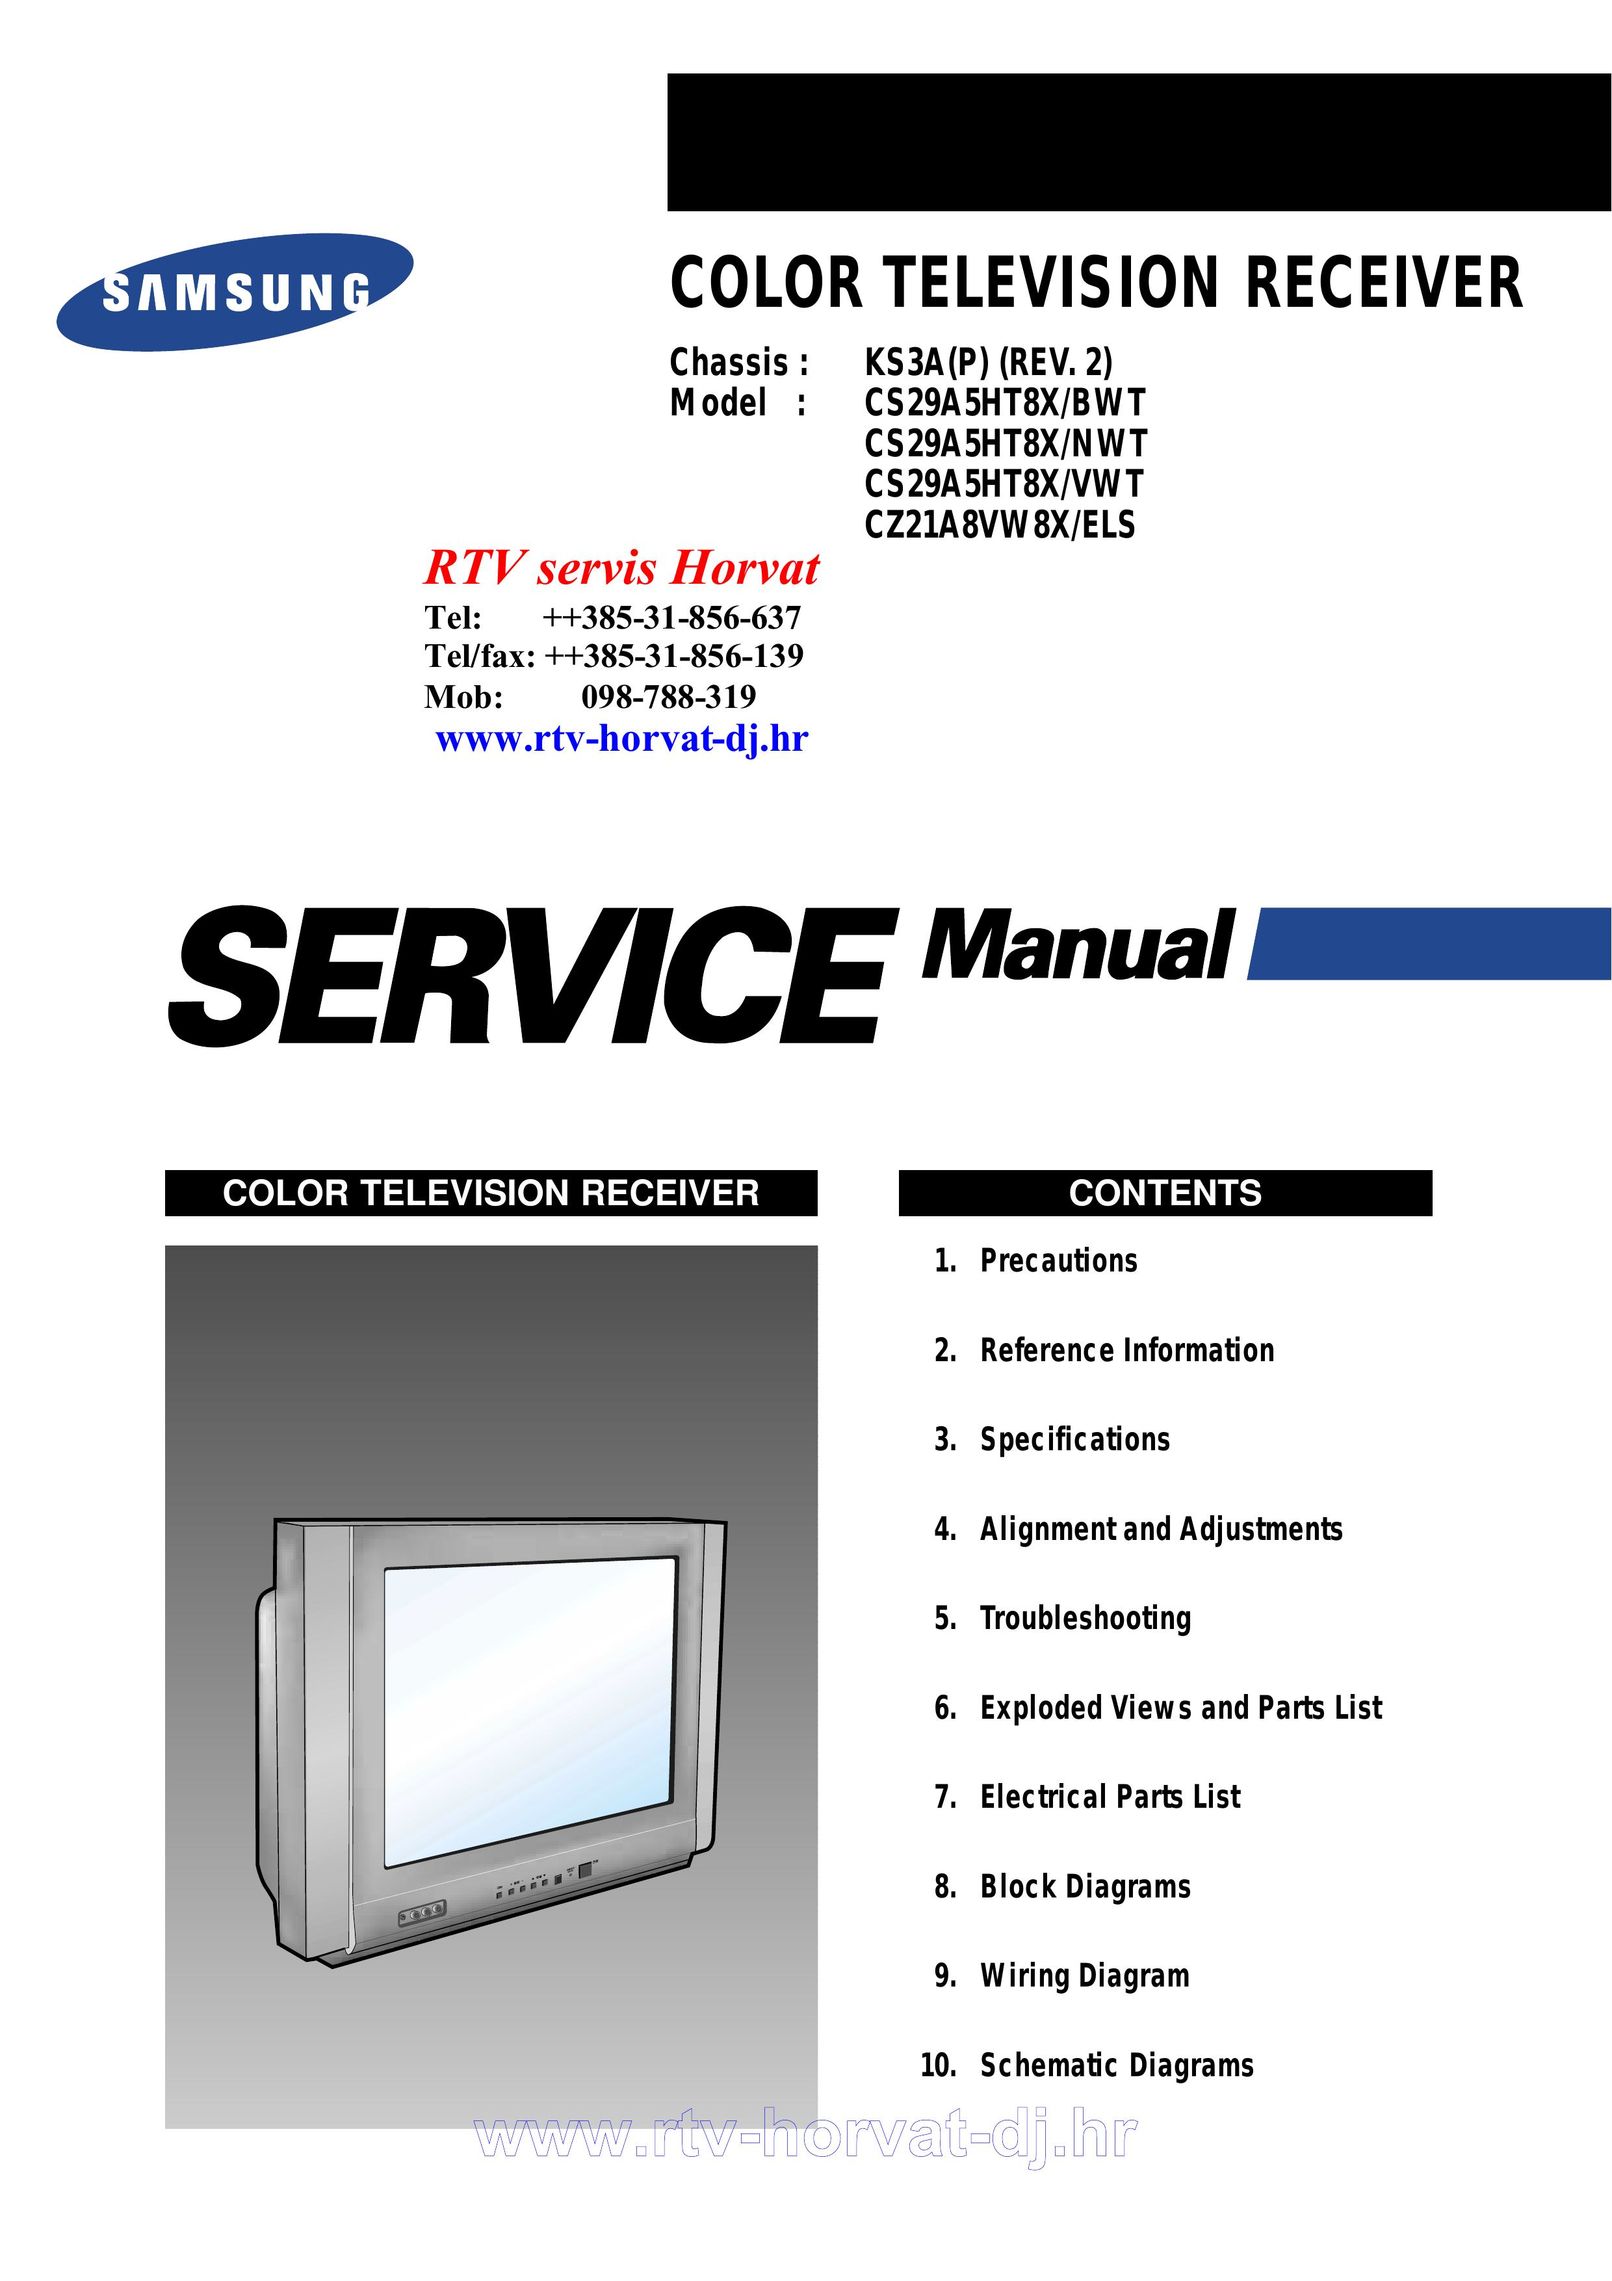 Samsung CS29A5HT8X/NWT TV Receiver User Manual